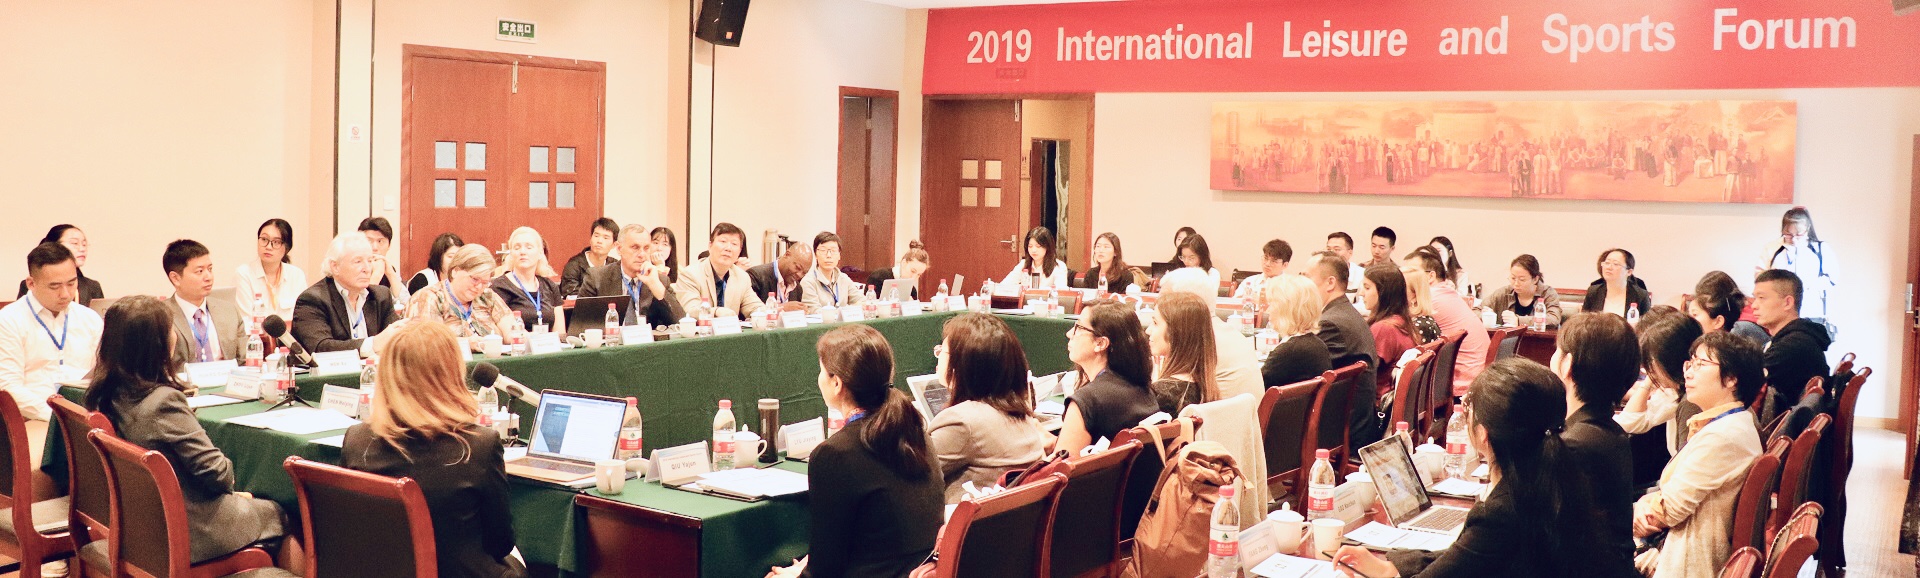 2019 International Leisure and Sports Forum in Hangzhou